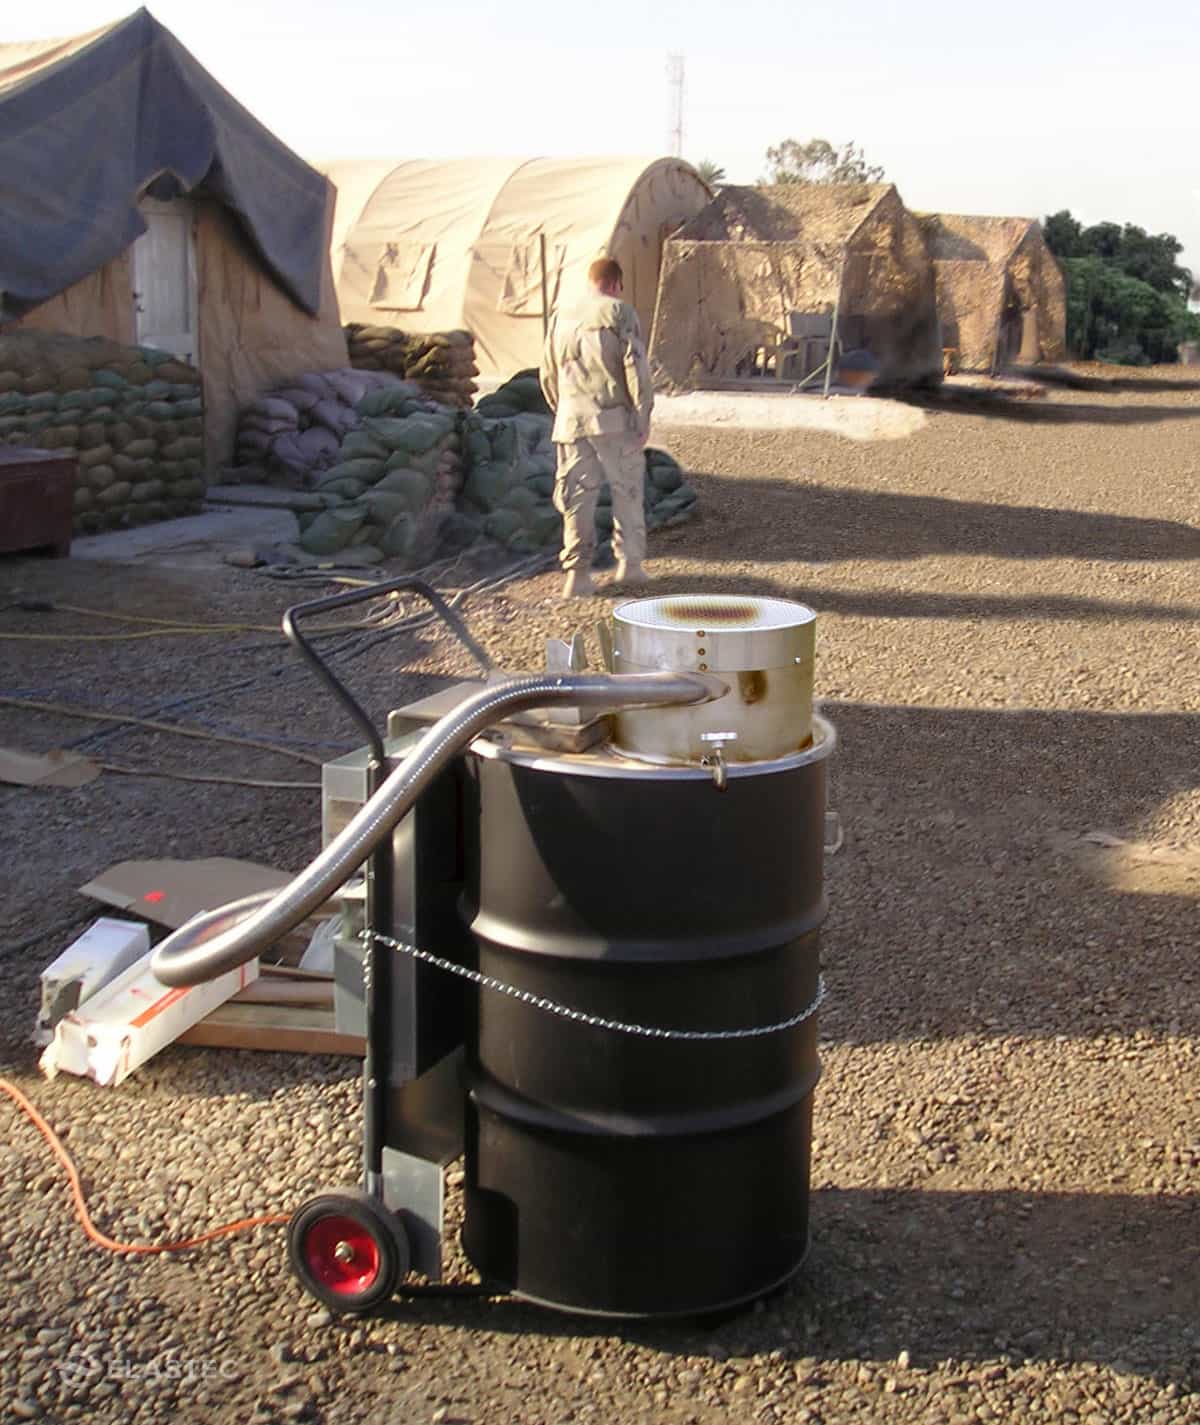 SmartAsh portable incinerator for military camp